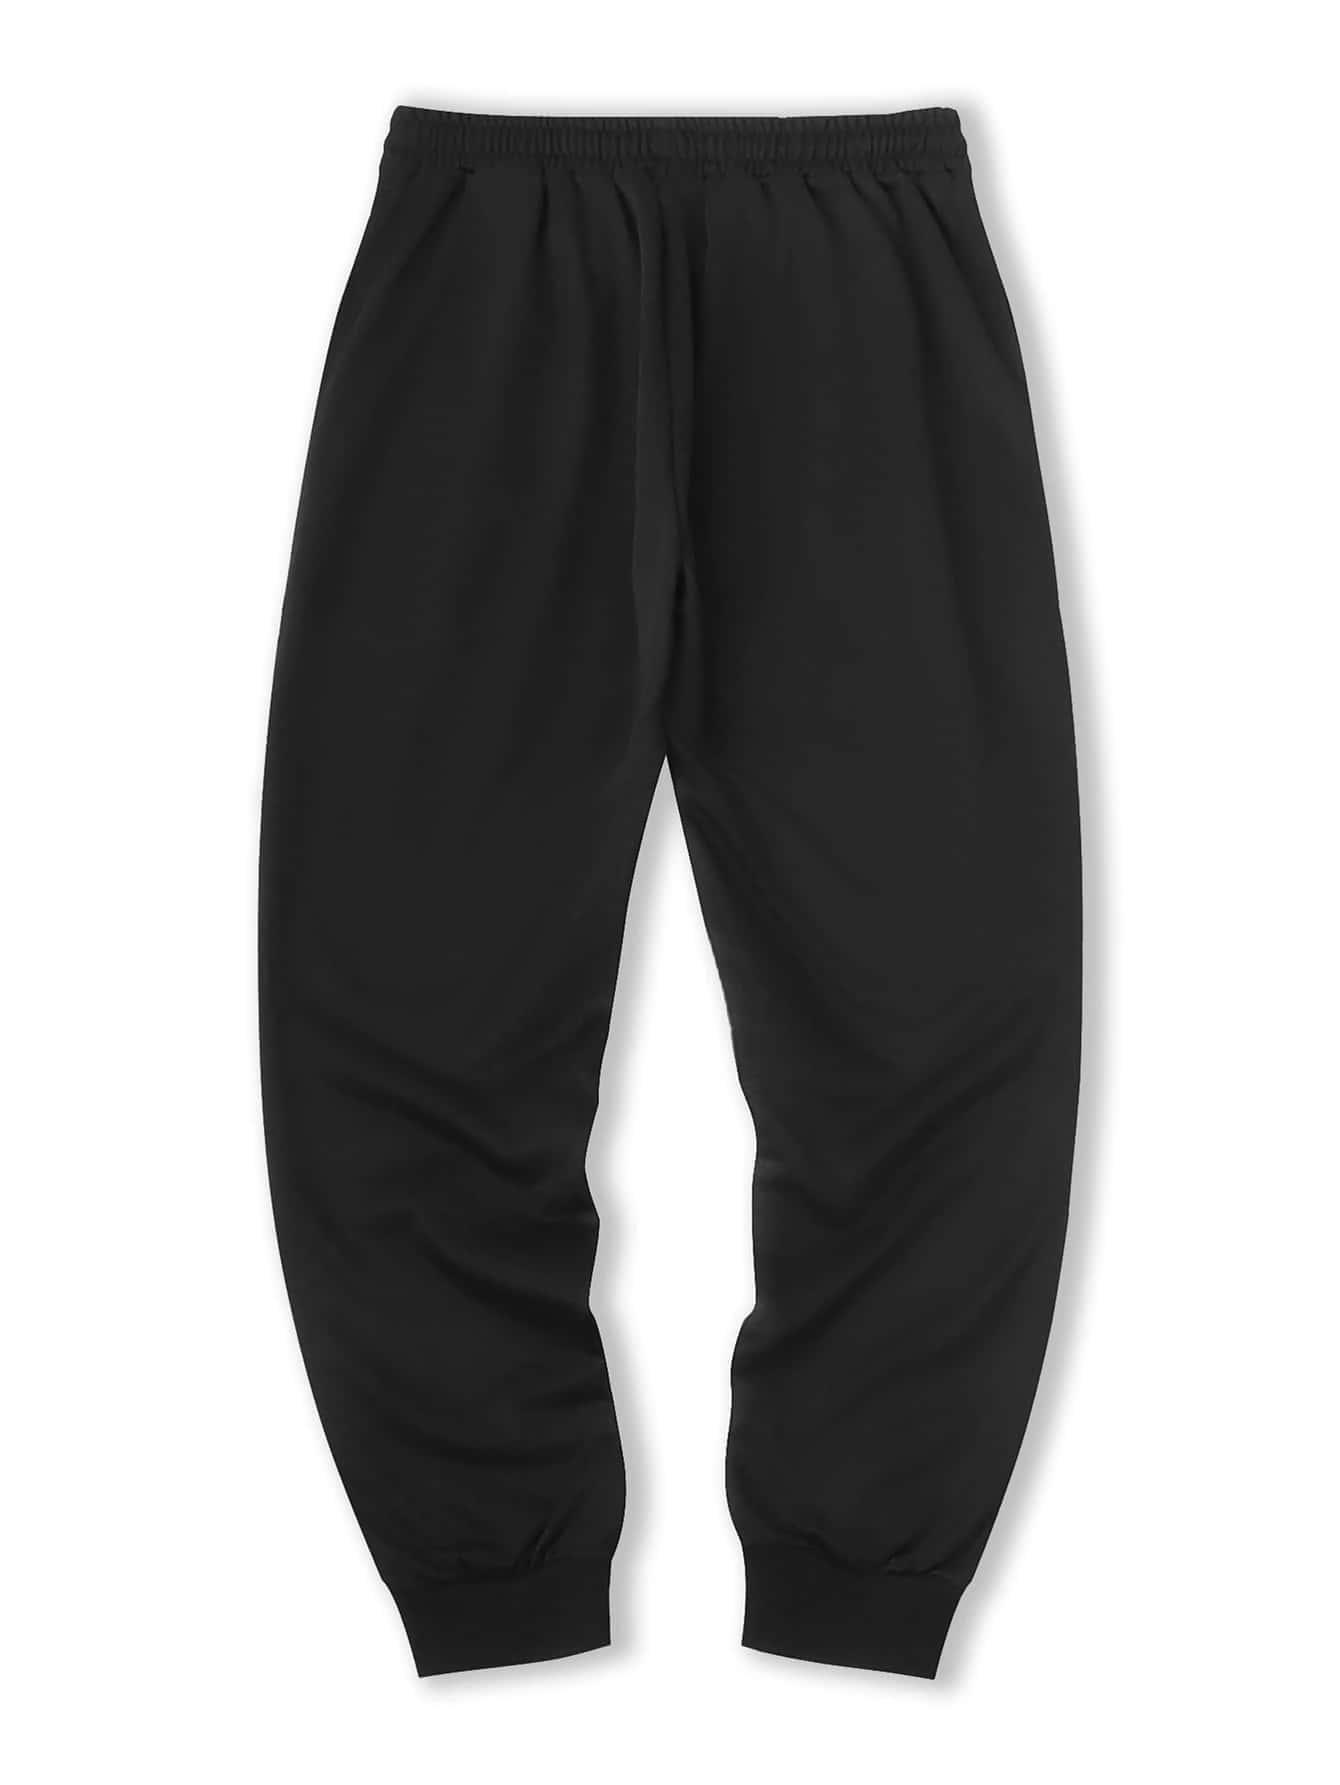 Pantalones deportivos con cordón gráfico - Urban Tribes Store